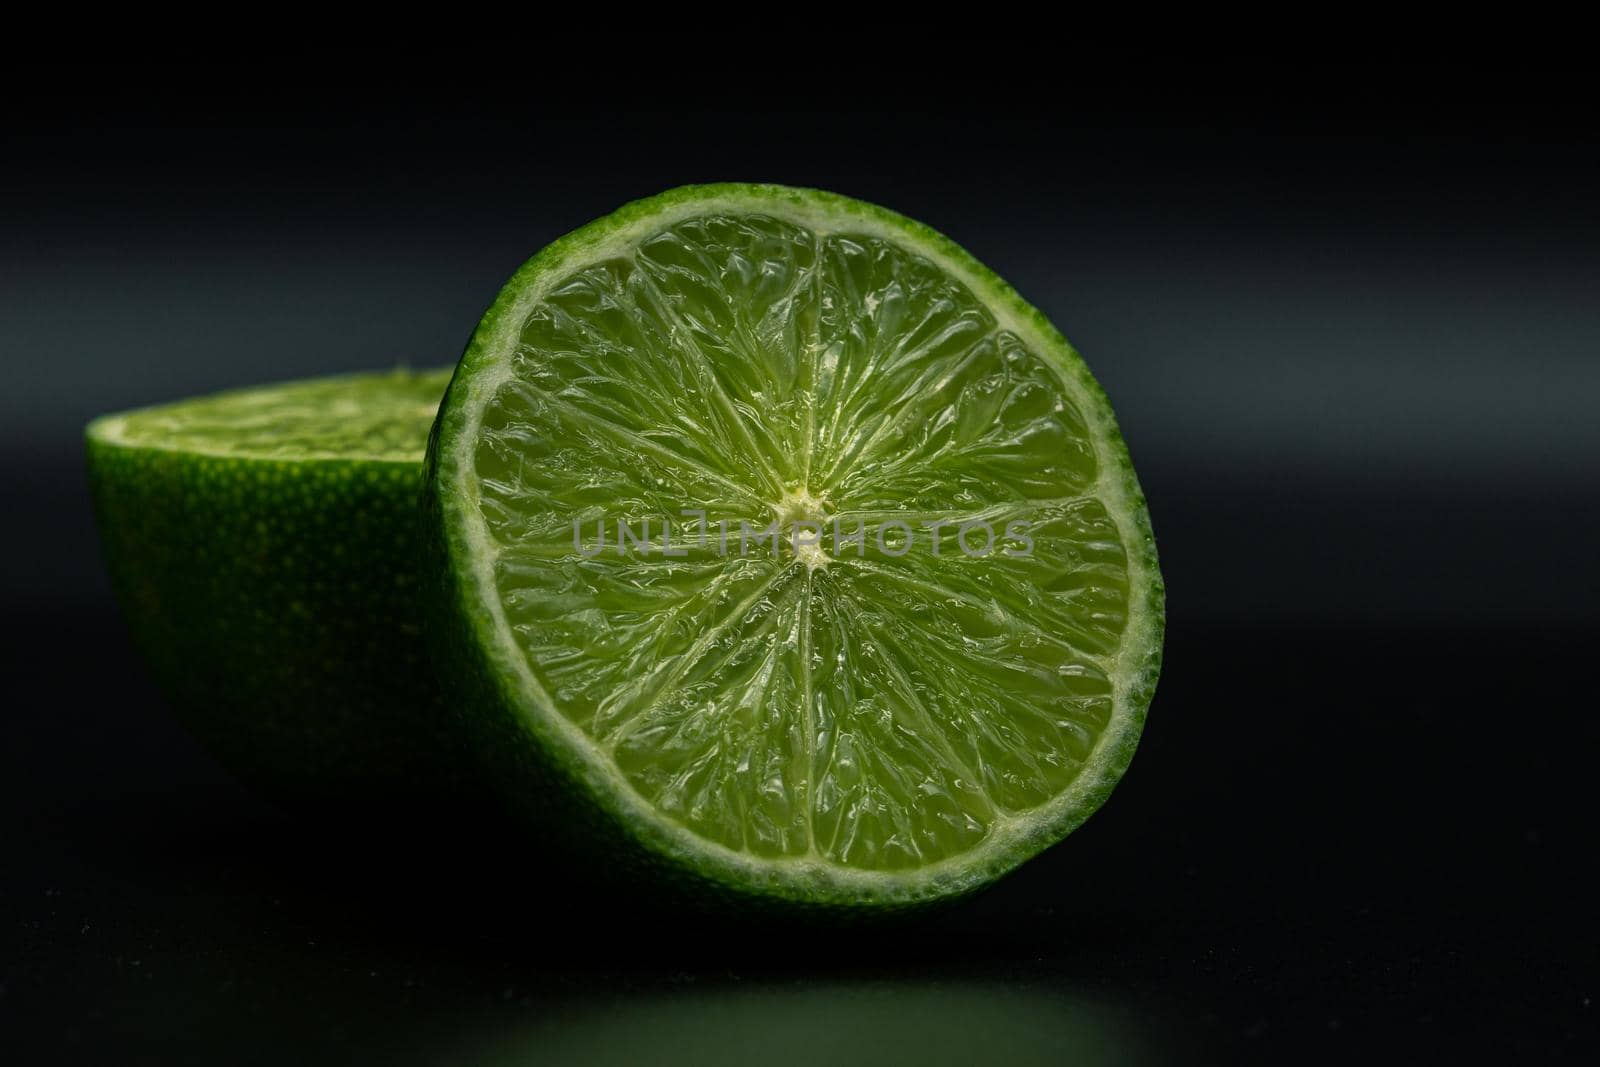 Green lime citruss fruit cutting half macro fiber inside, black background